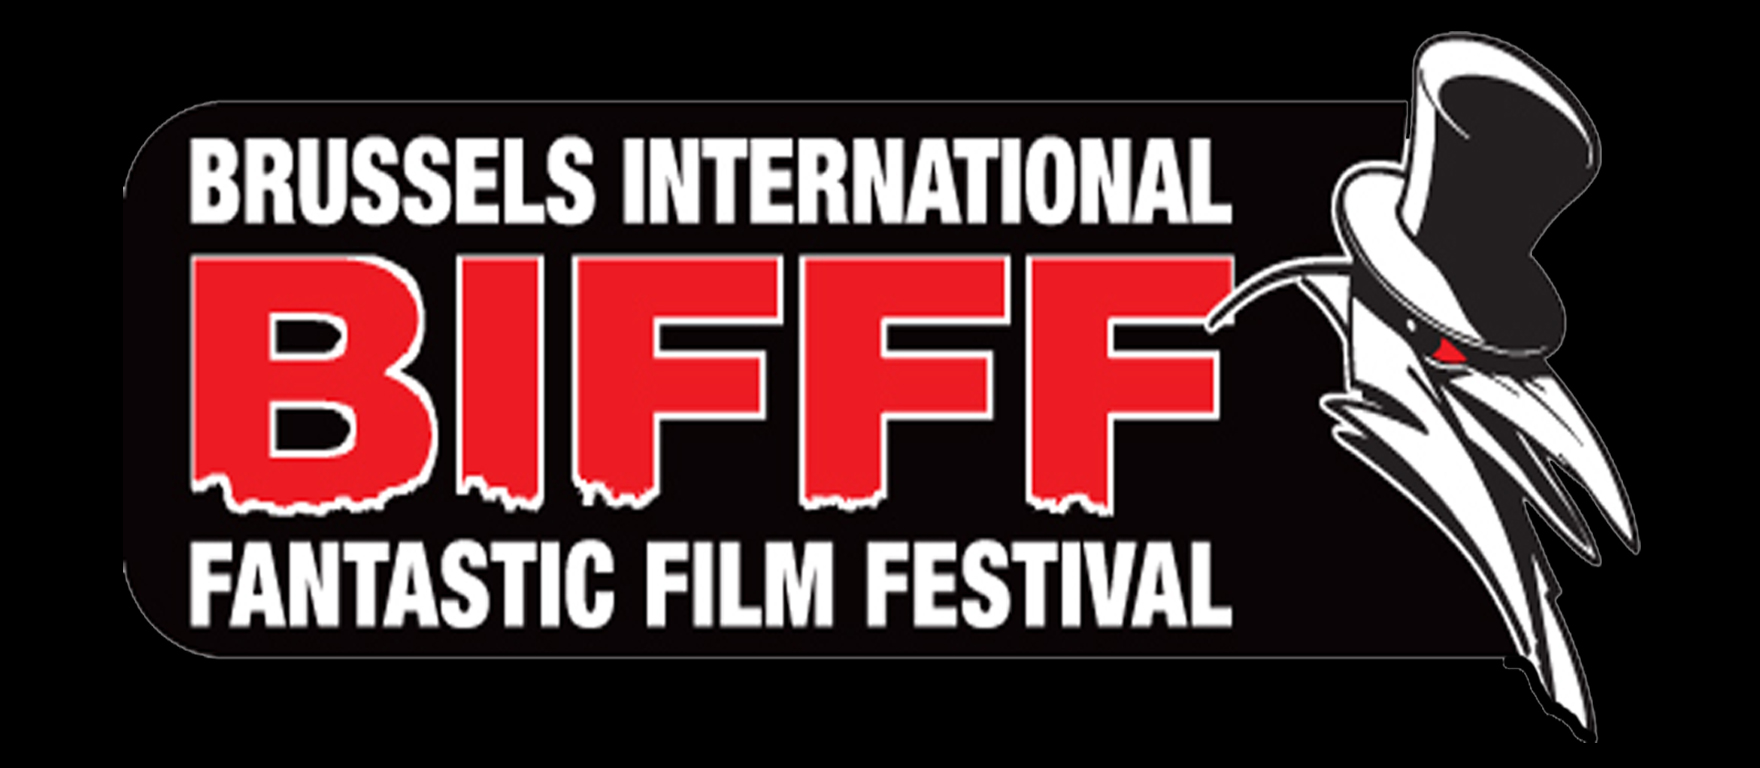 Brussels International Fantastic Film Festival (BIFFF)